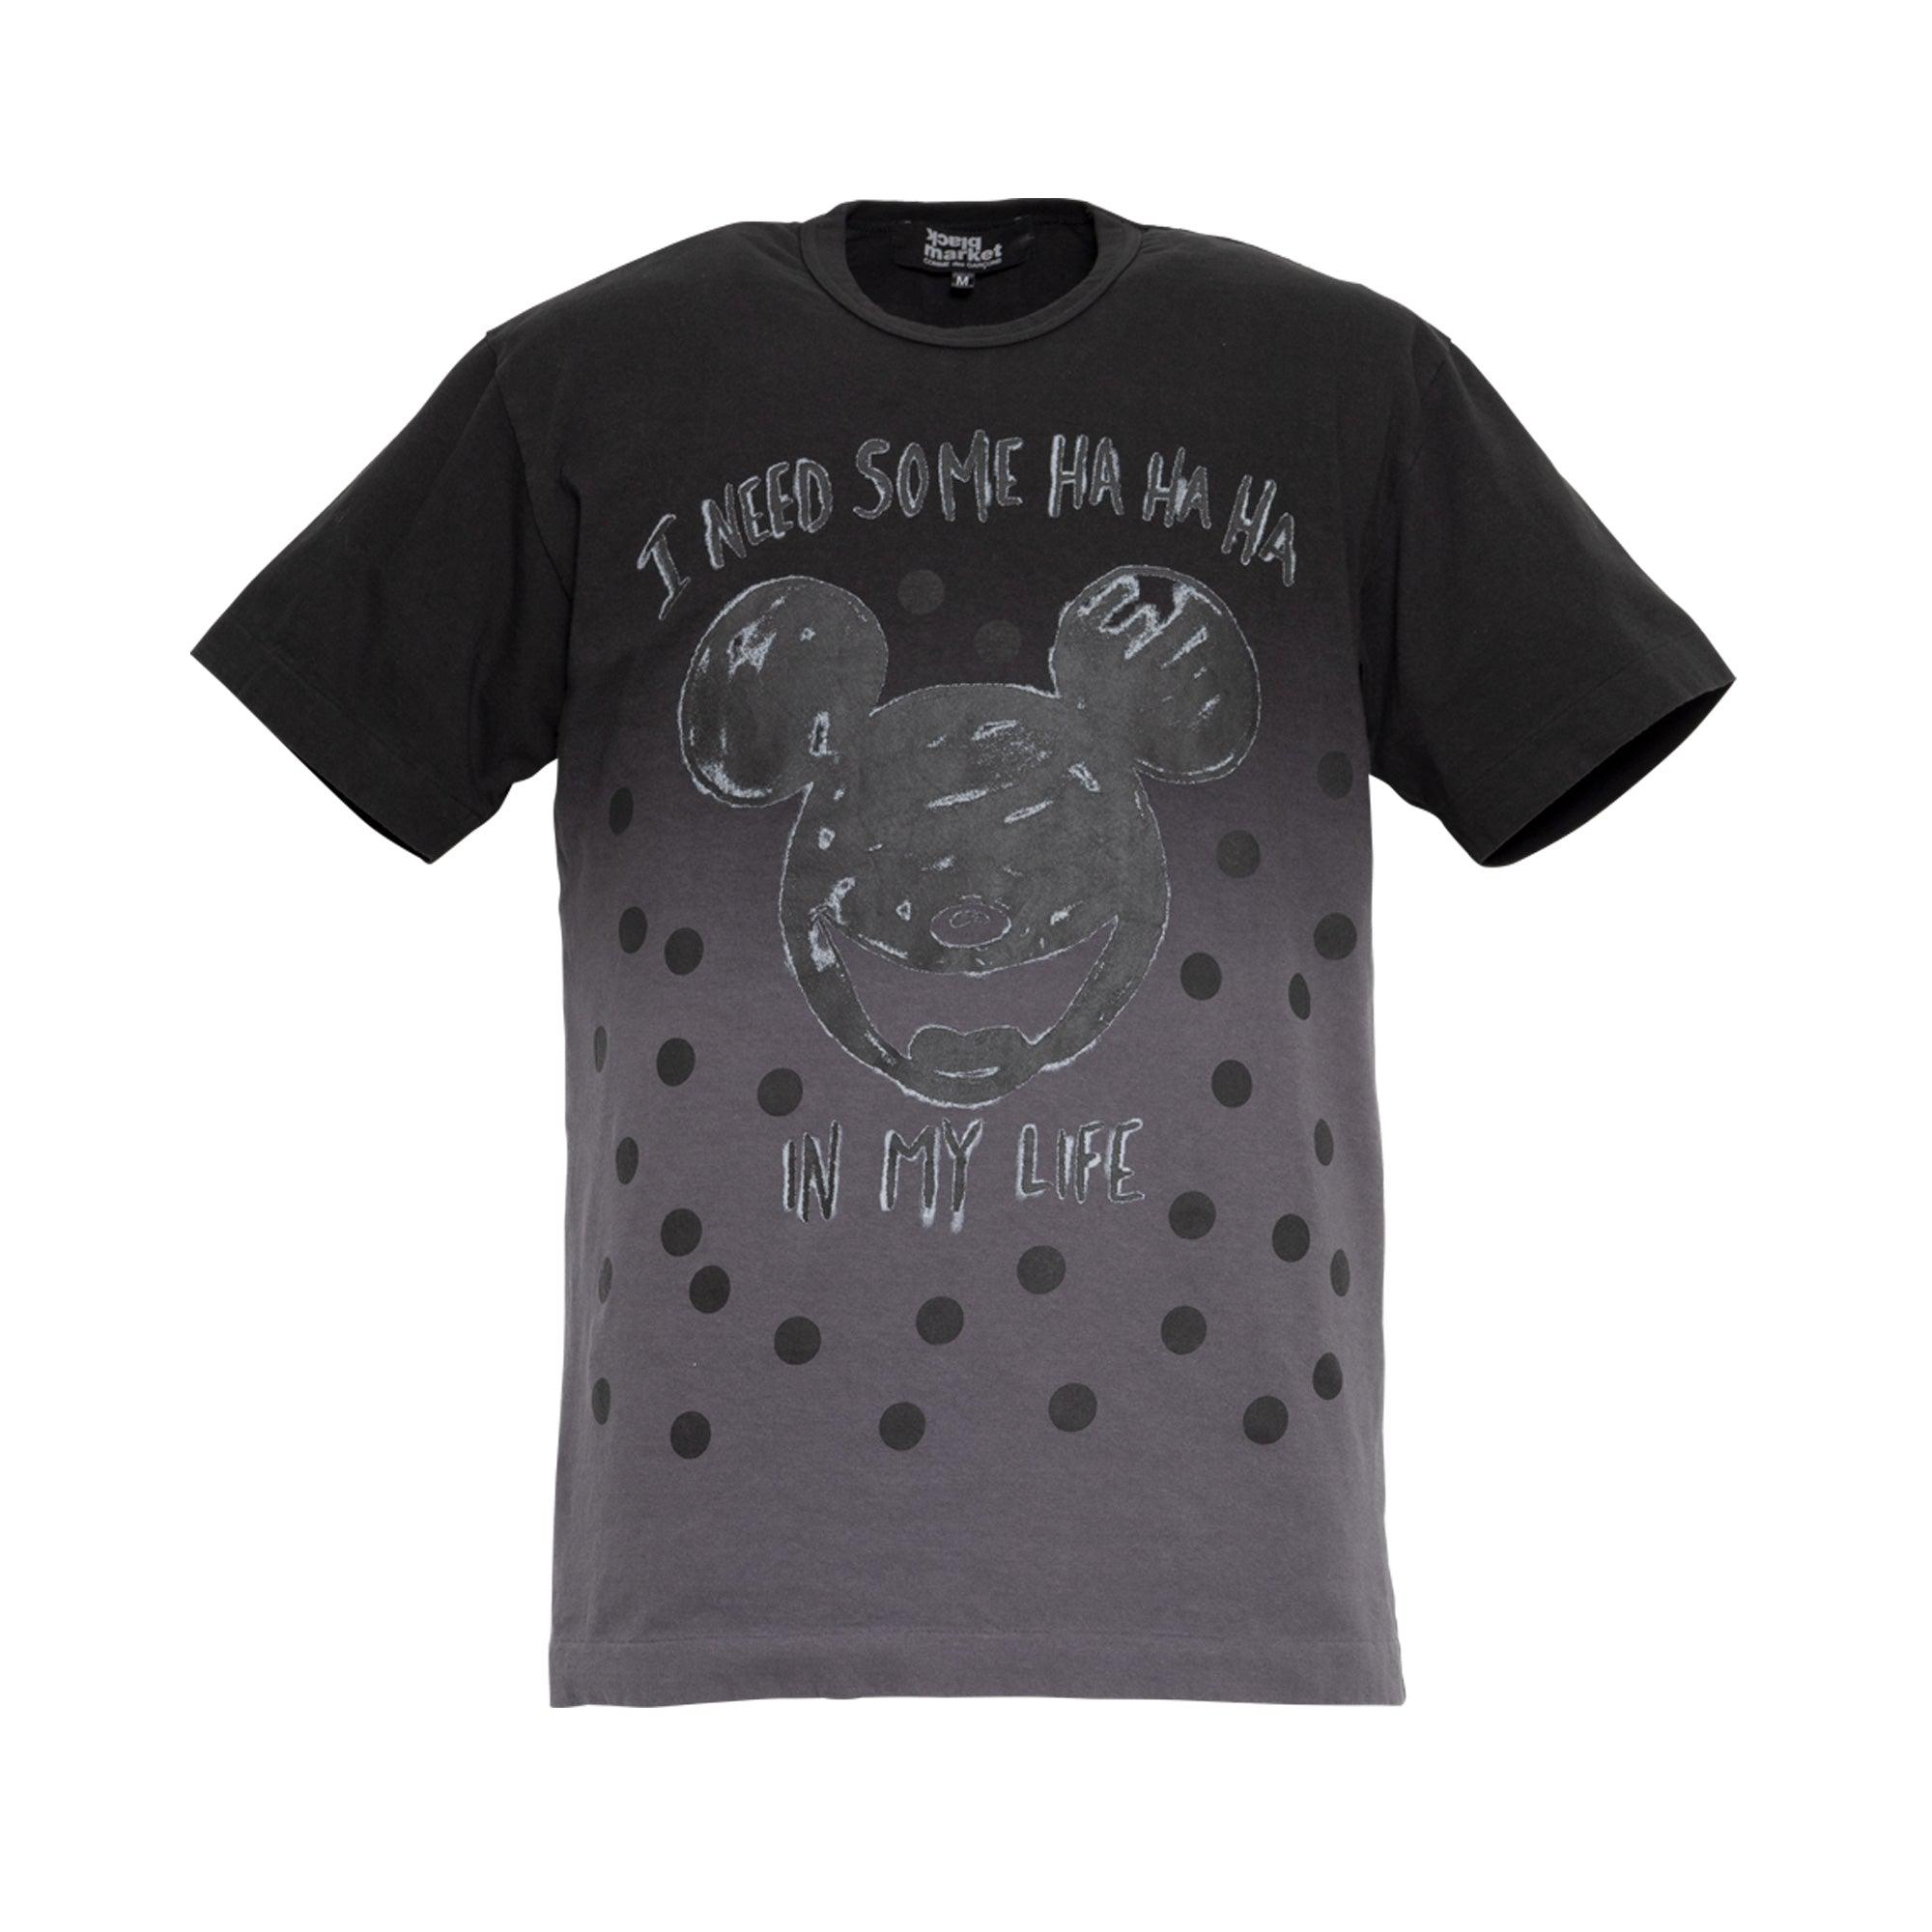 Comme des Garçons Black Market x Disney Ha Ha Ha T-Shirt (Black) by BLACK MARKET